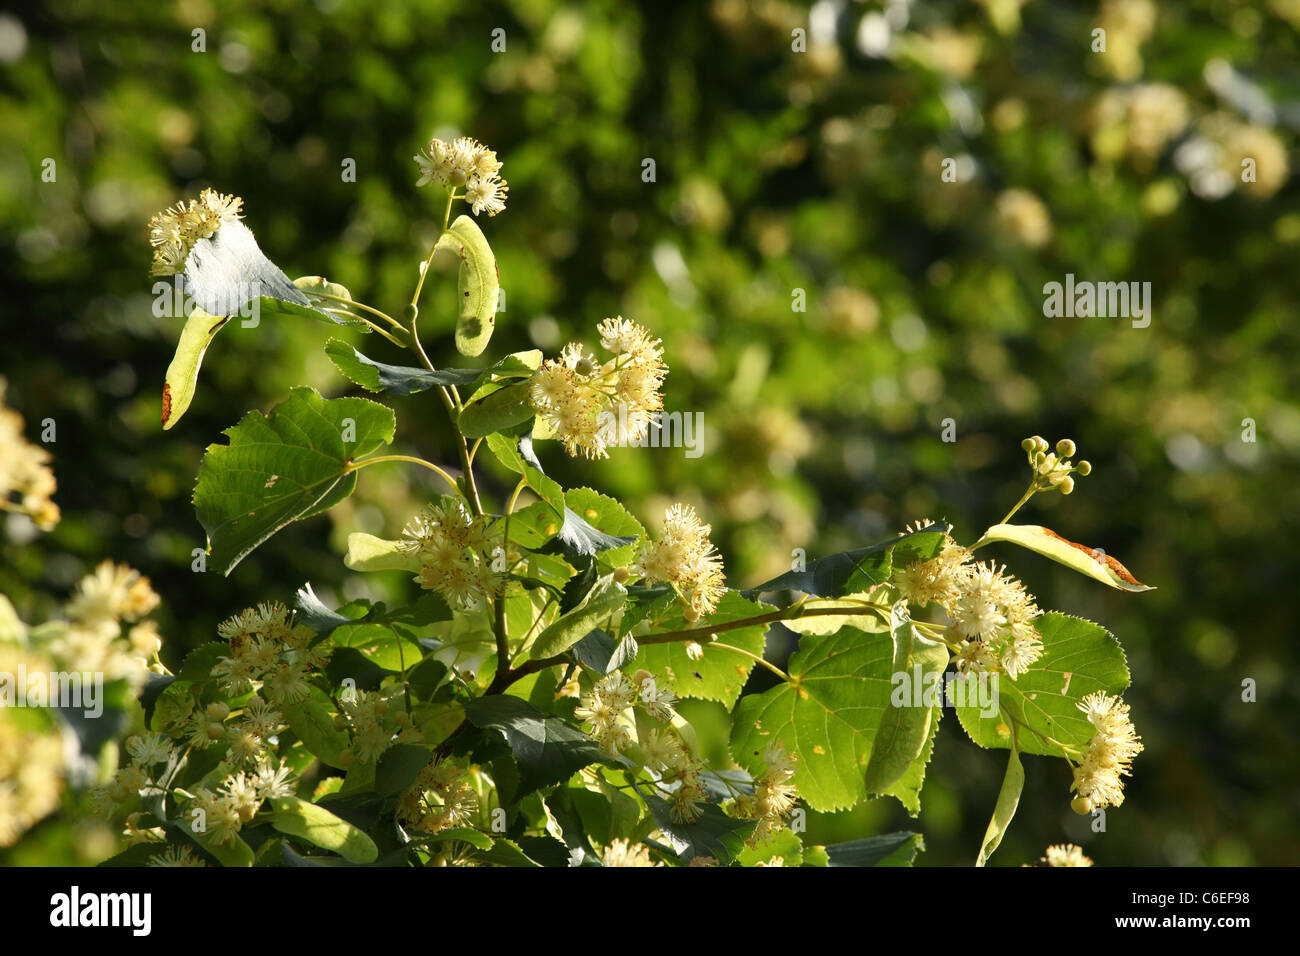 Small-leaved Lime tree (Tilia cordata) flowering. Location: Male Karpaty, Slovakia. Stock Photo